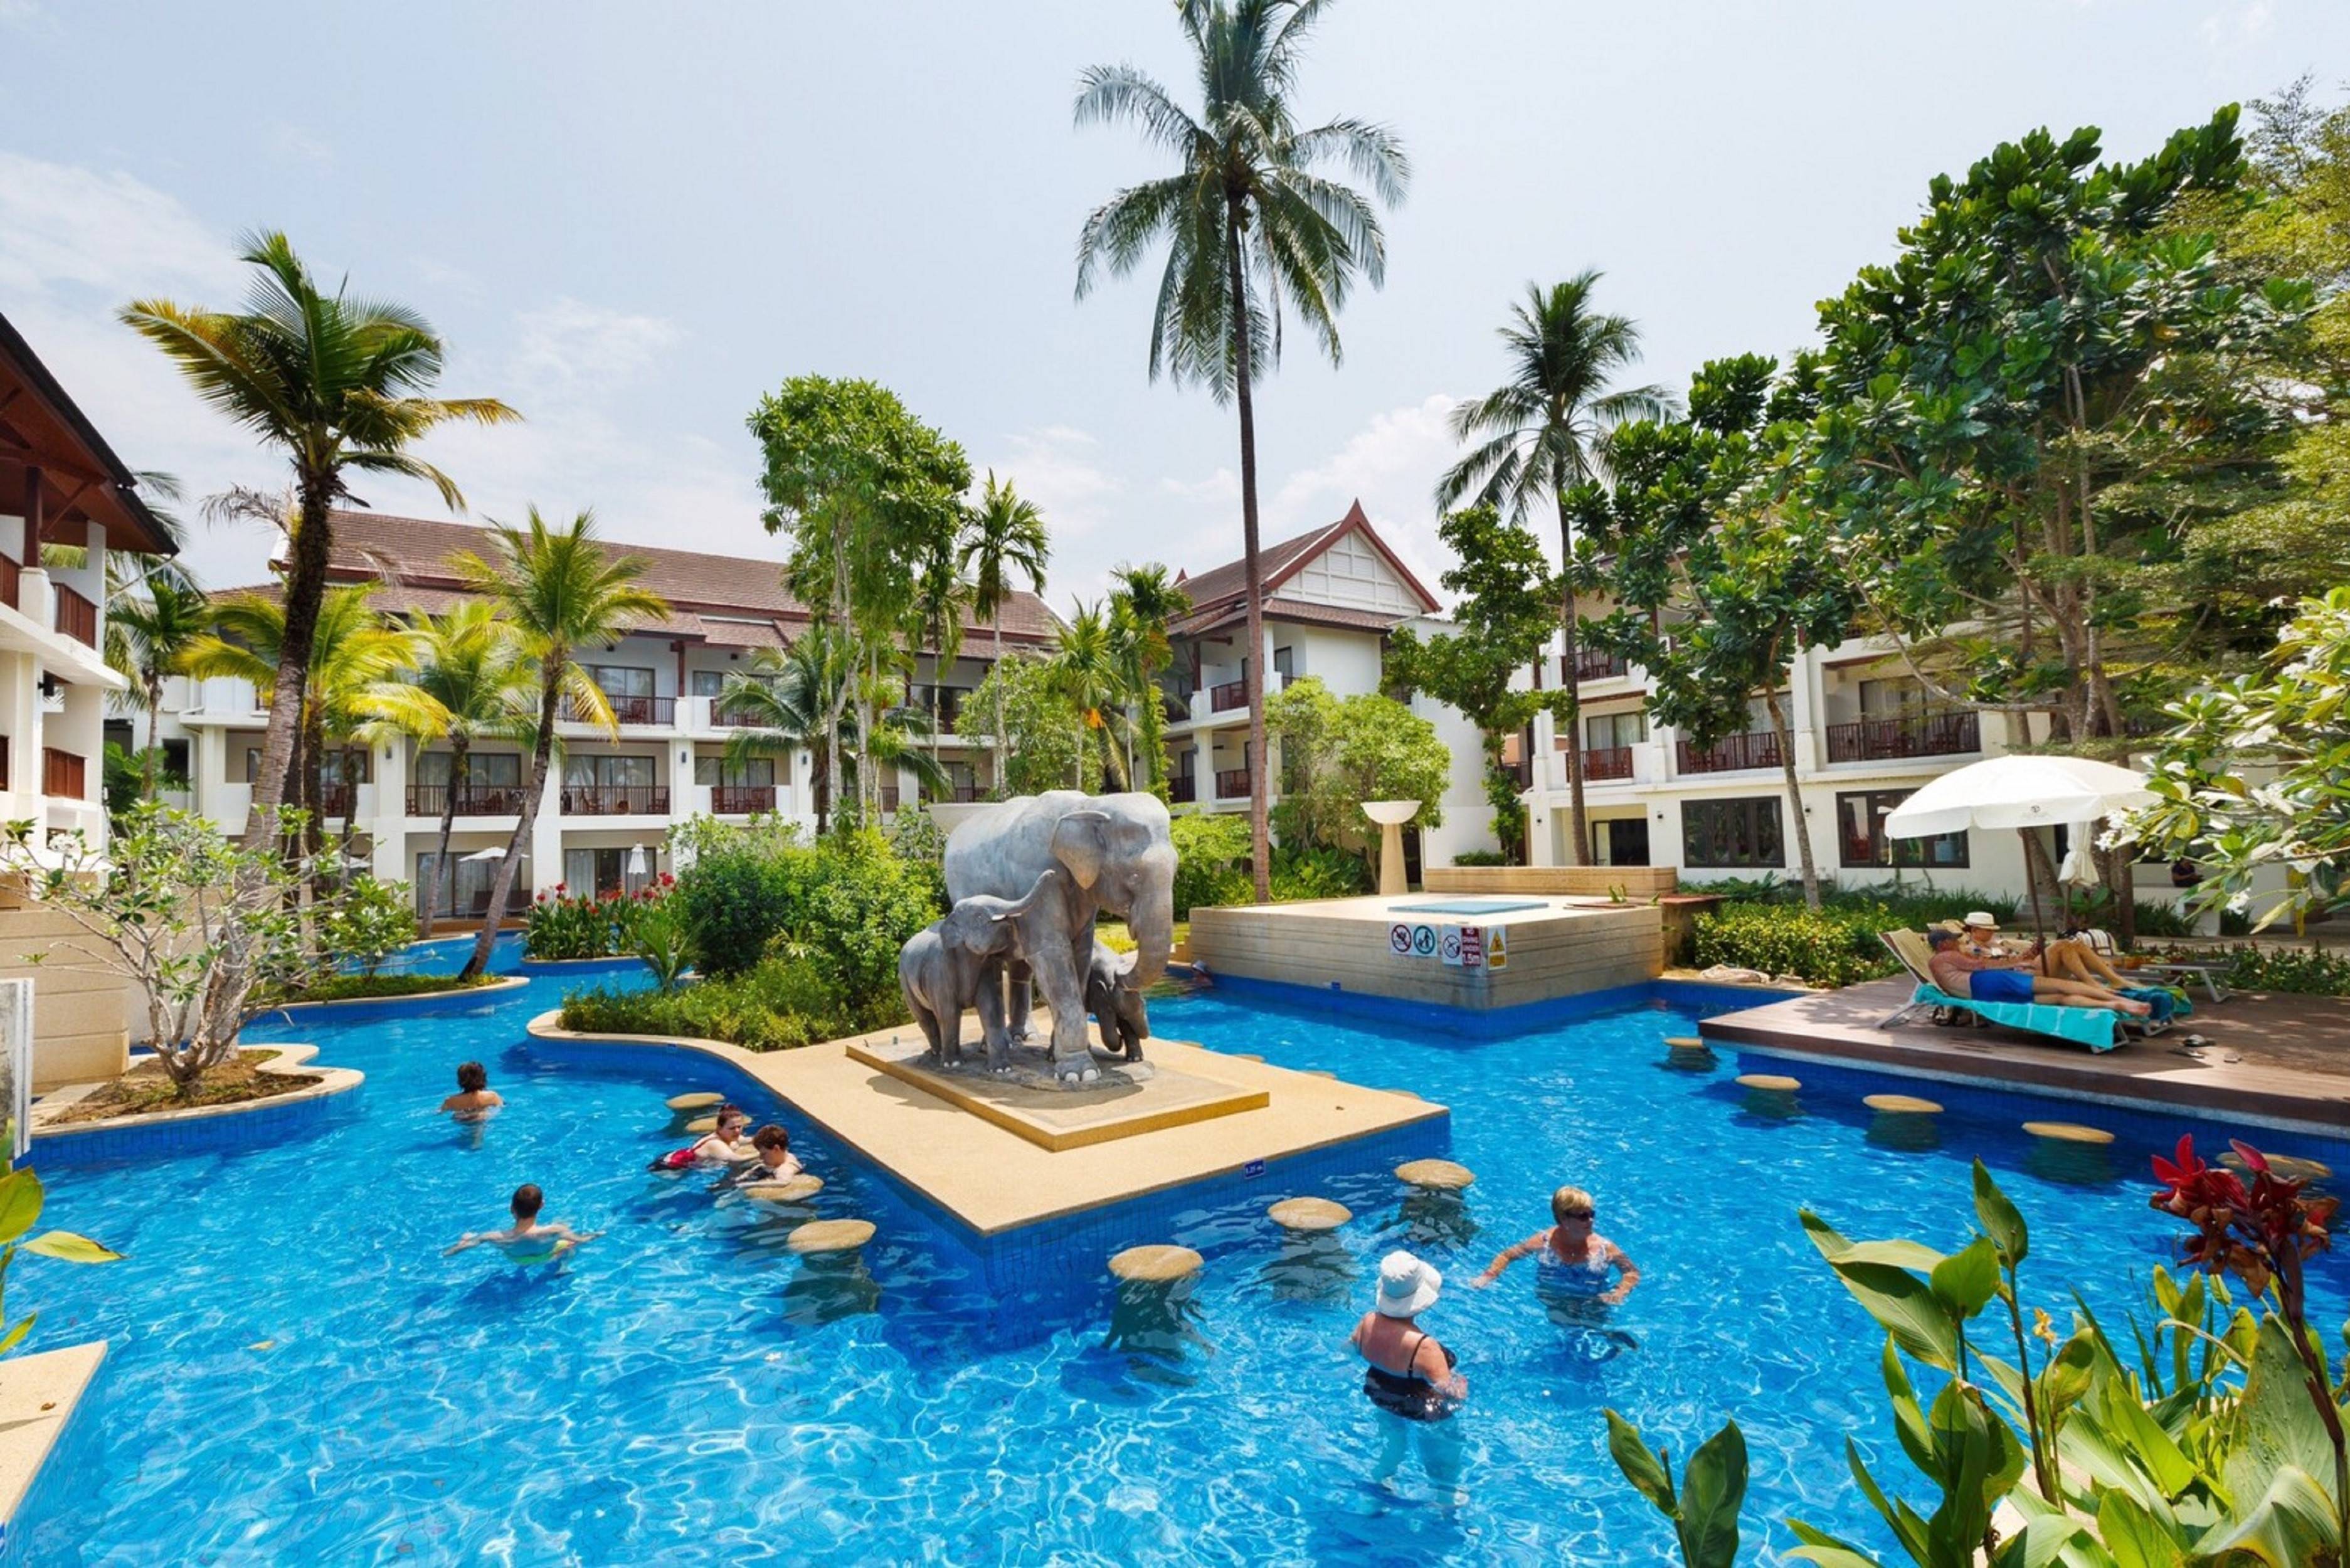  Apsara  Beachfront Resort I Khao  Lak  Thailand 333travel